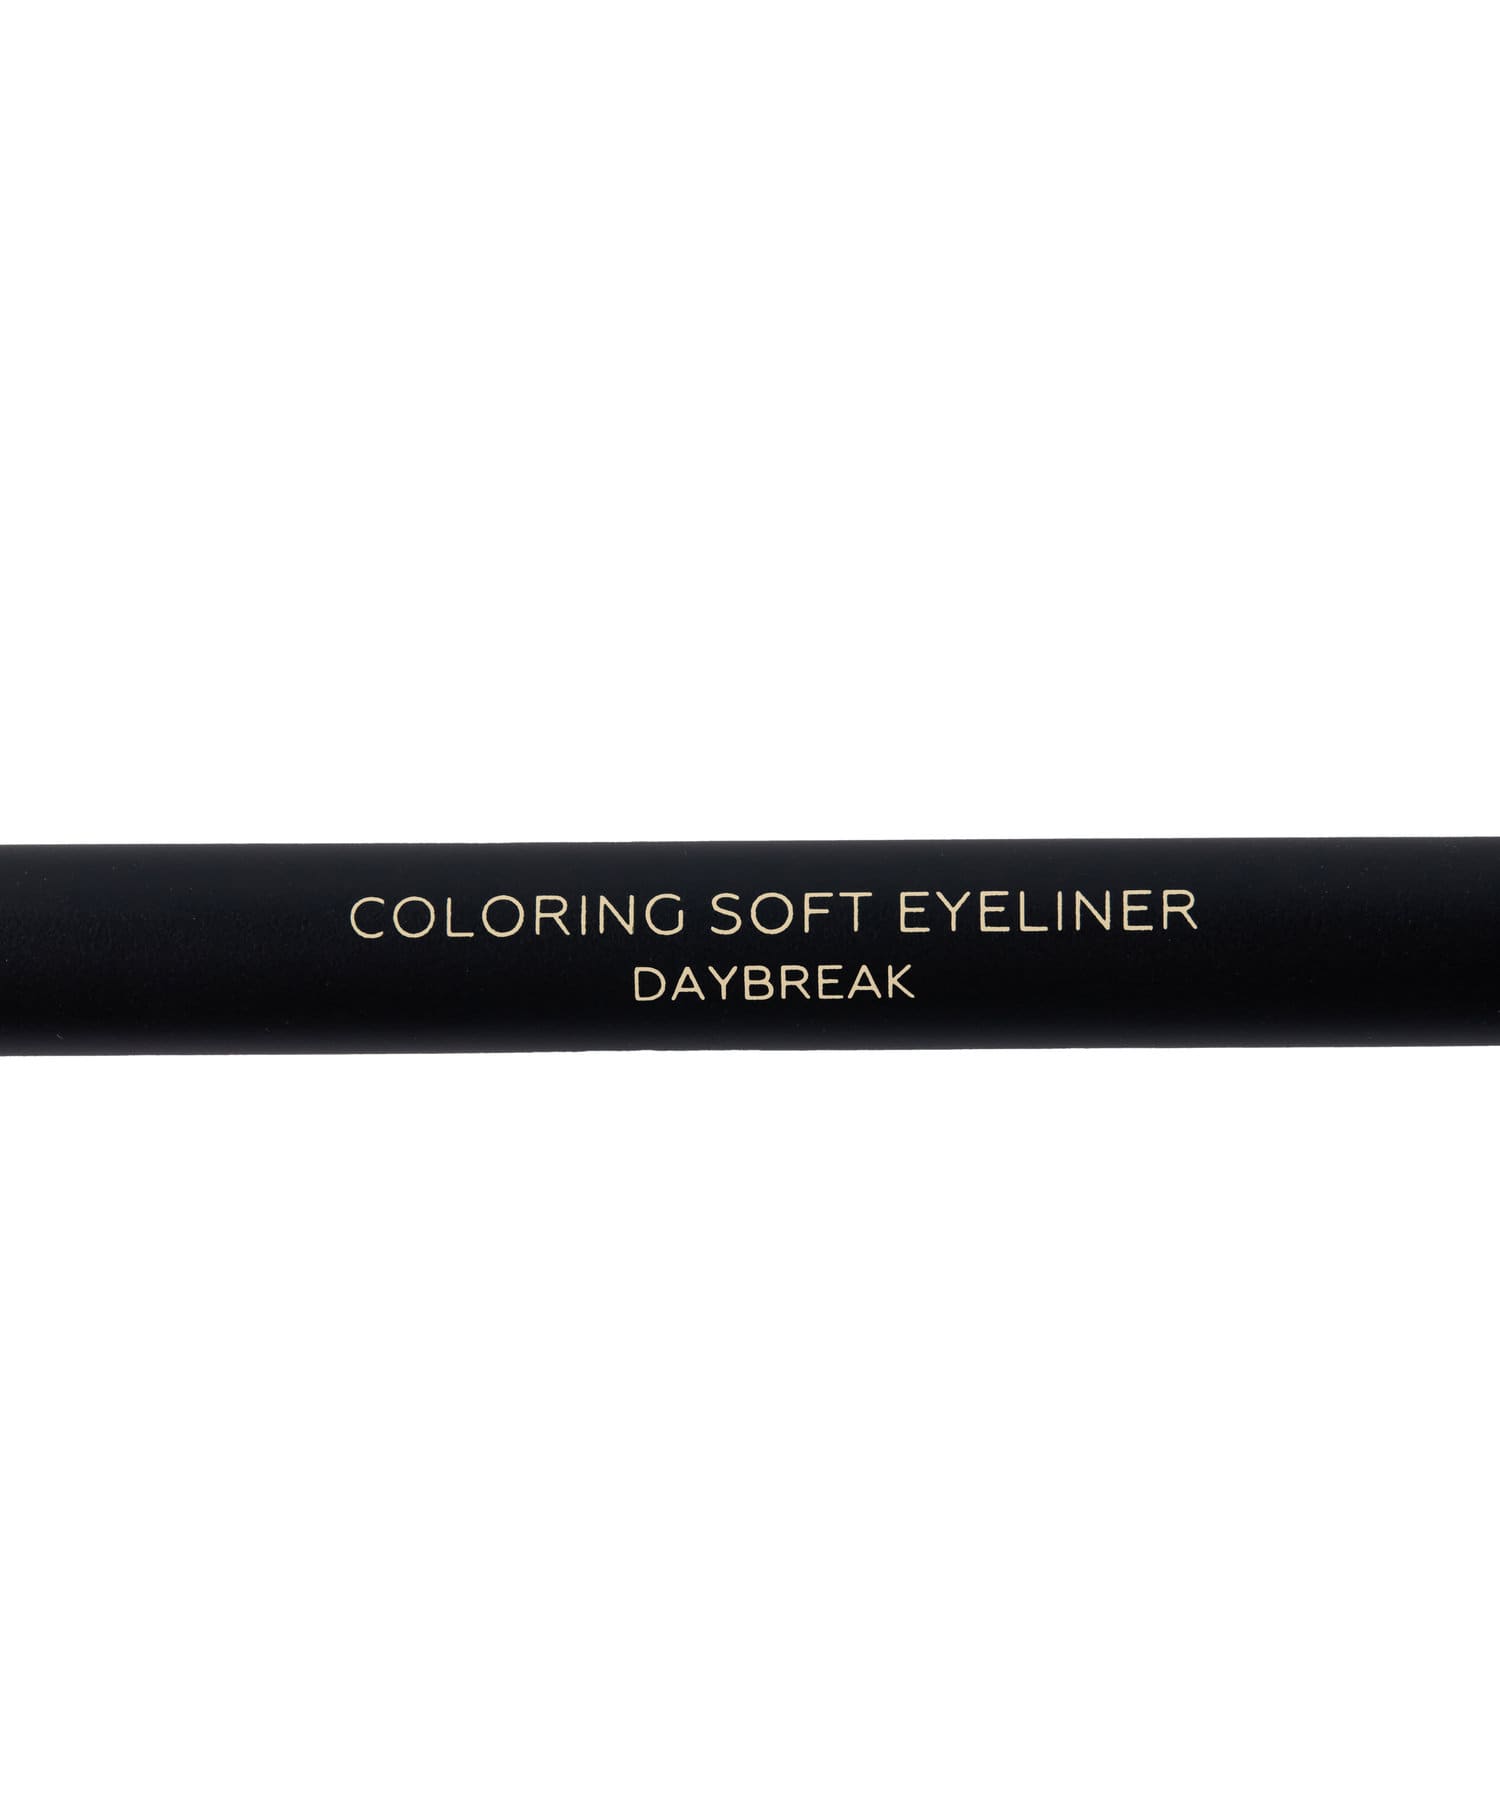 uneven coloring soft eyeliner | mystic(ミスティック)レディース